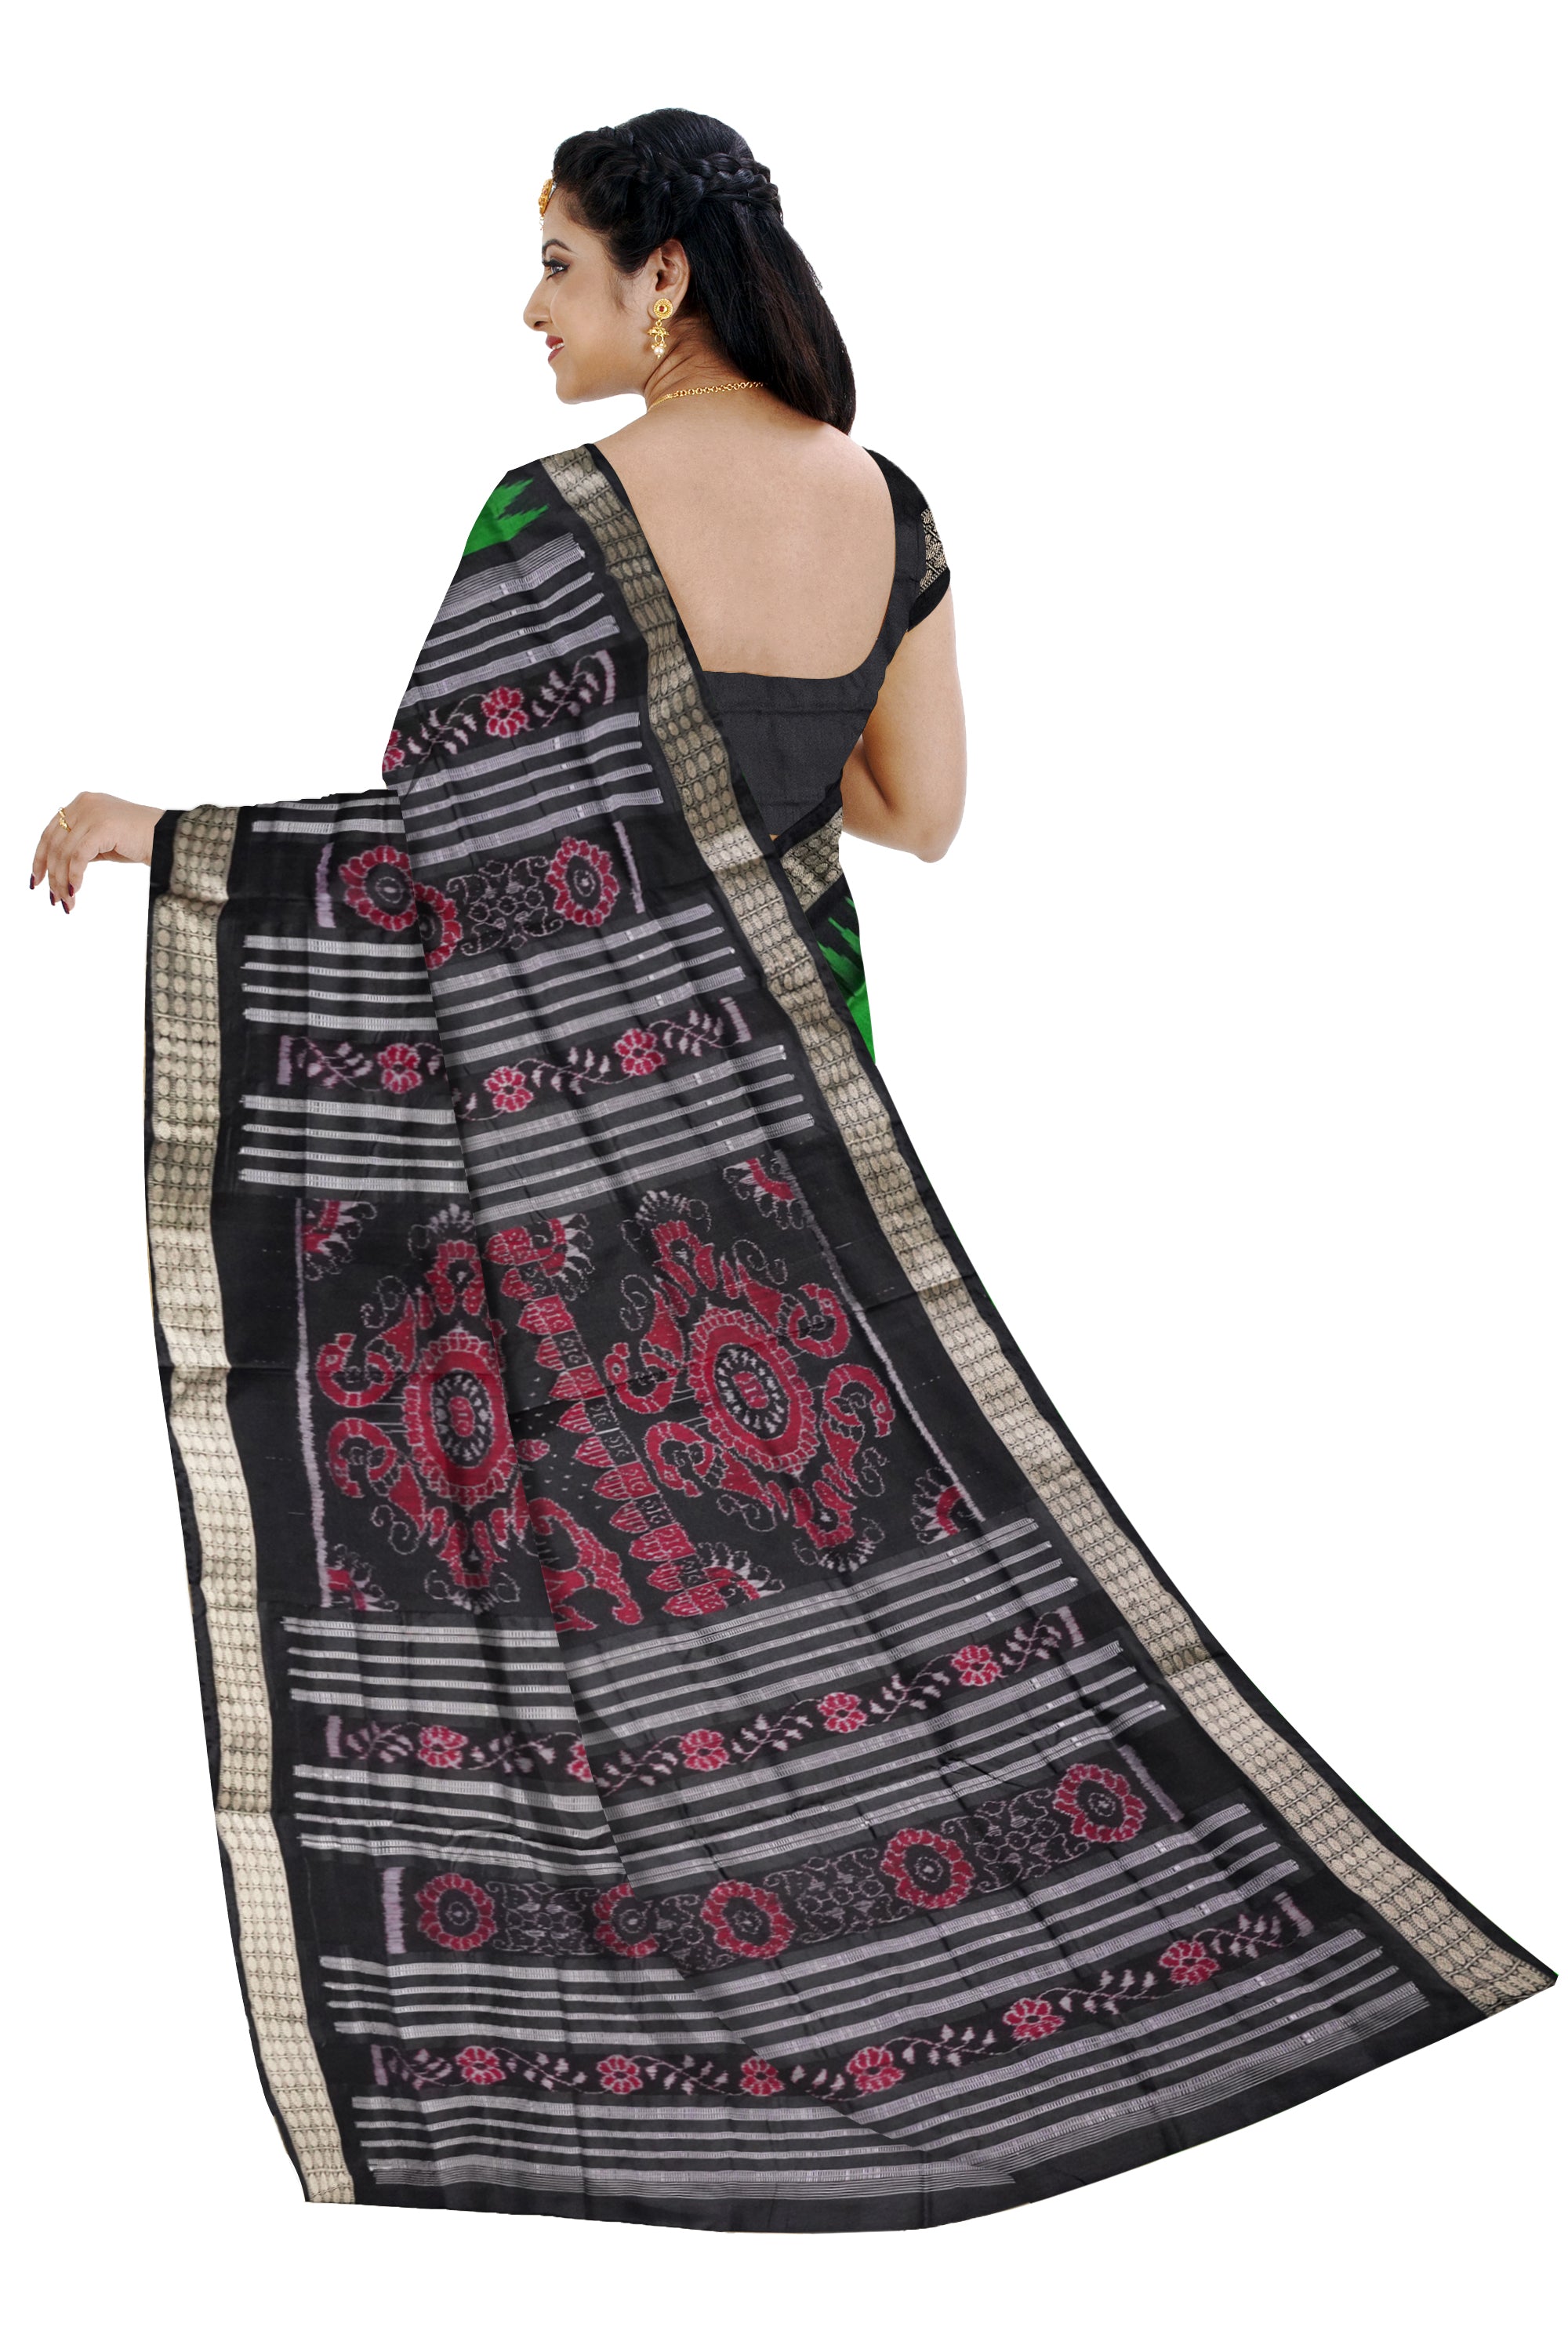 Green and black color small booty patern plain pata saree. - Koshali Arts & Crafts Enterprise